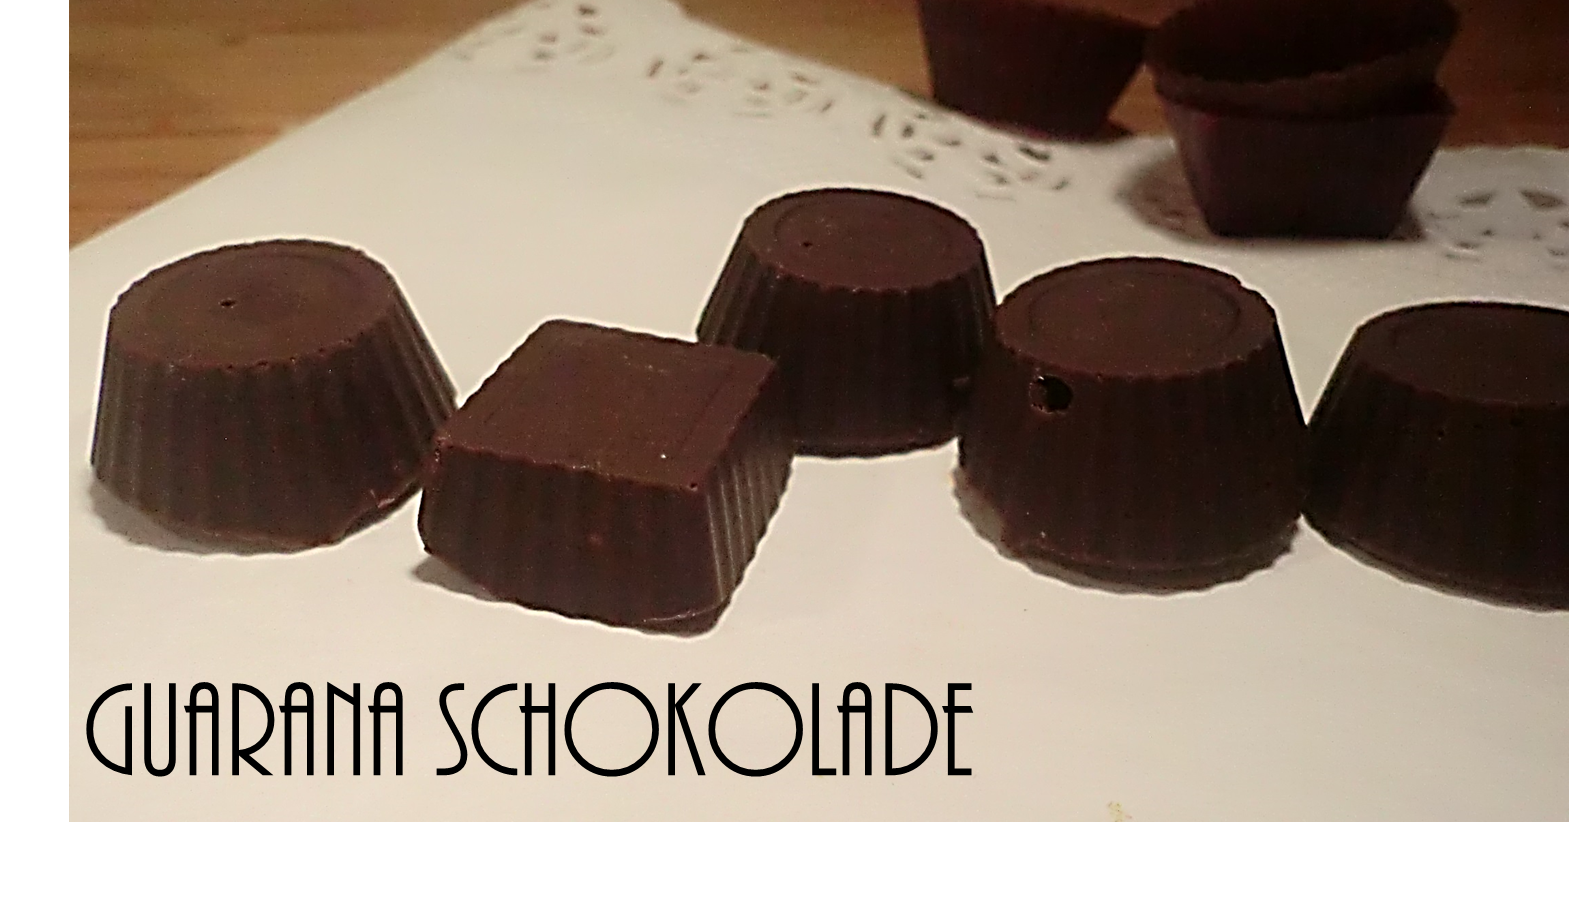 Guarana Schokolade